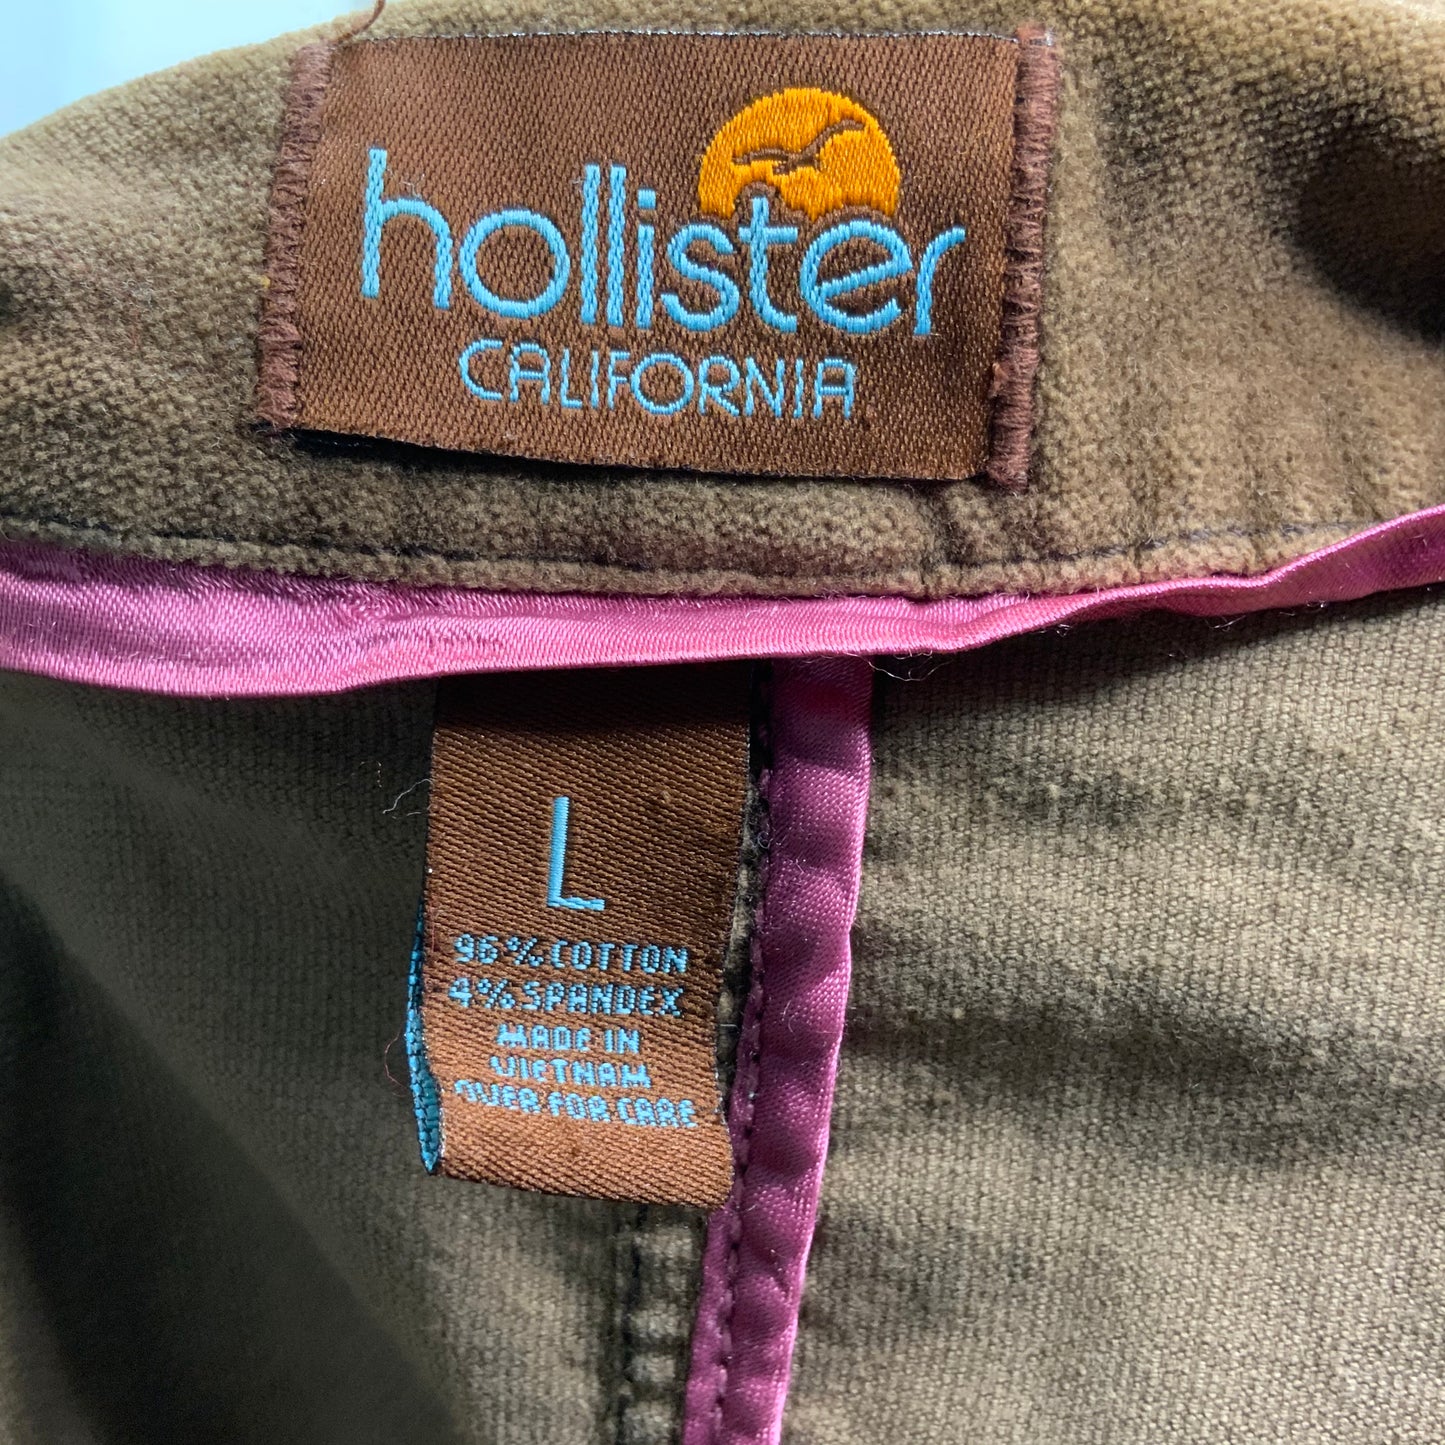 Vintage Brown Hollister Corduroy Jacket